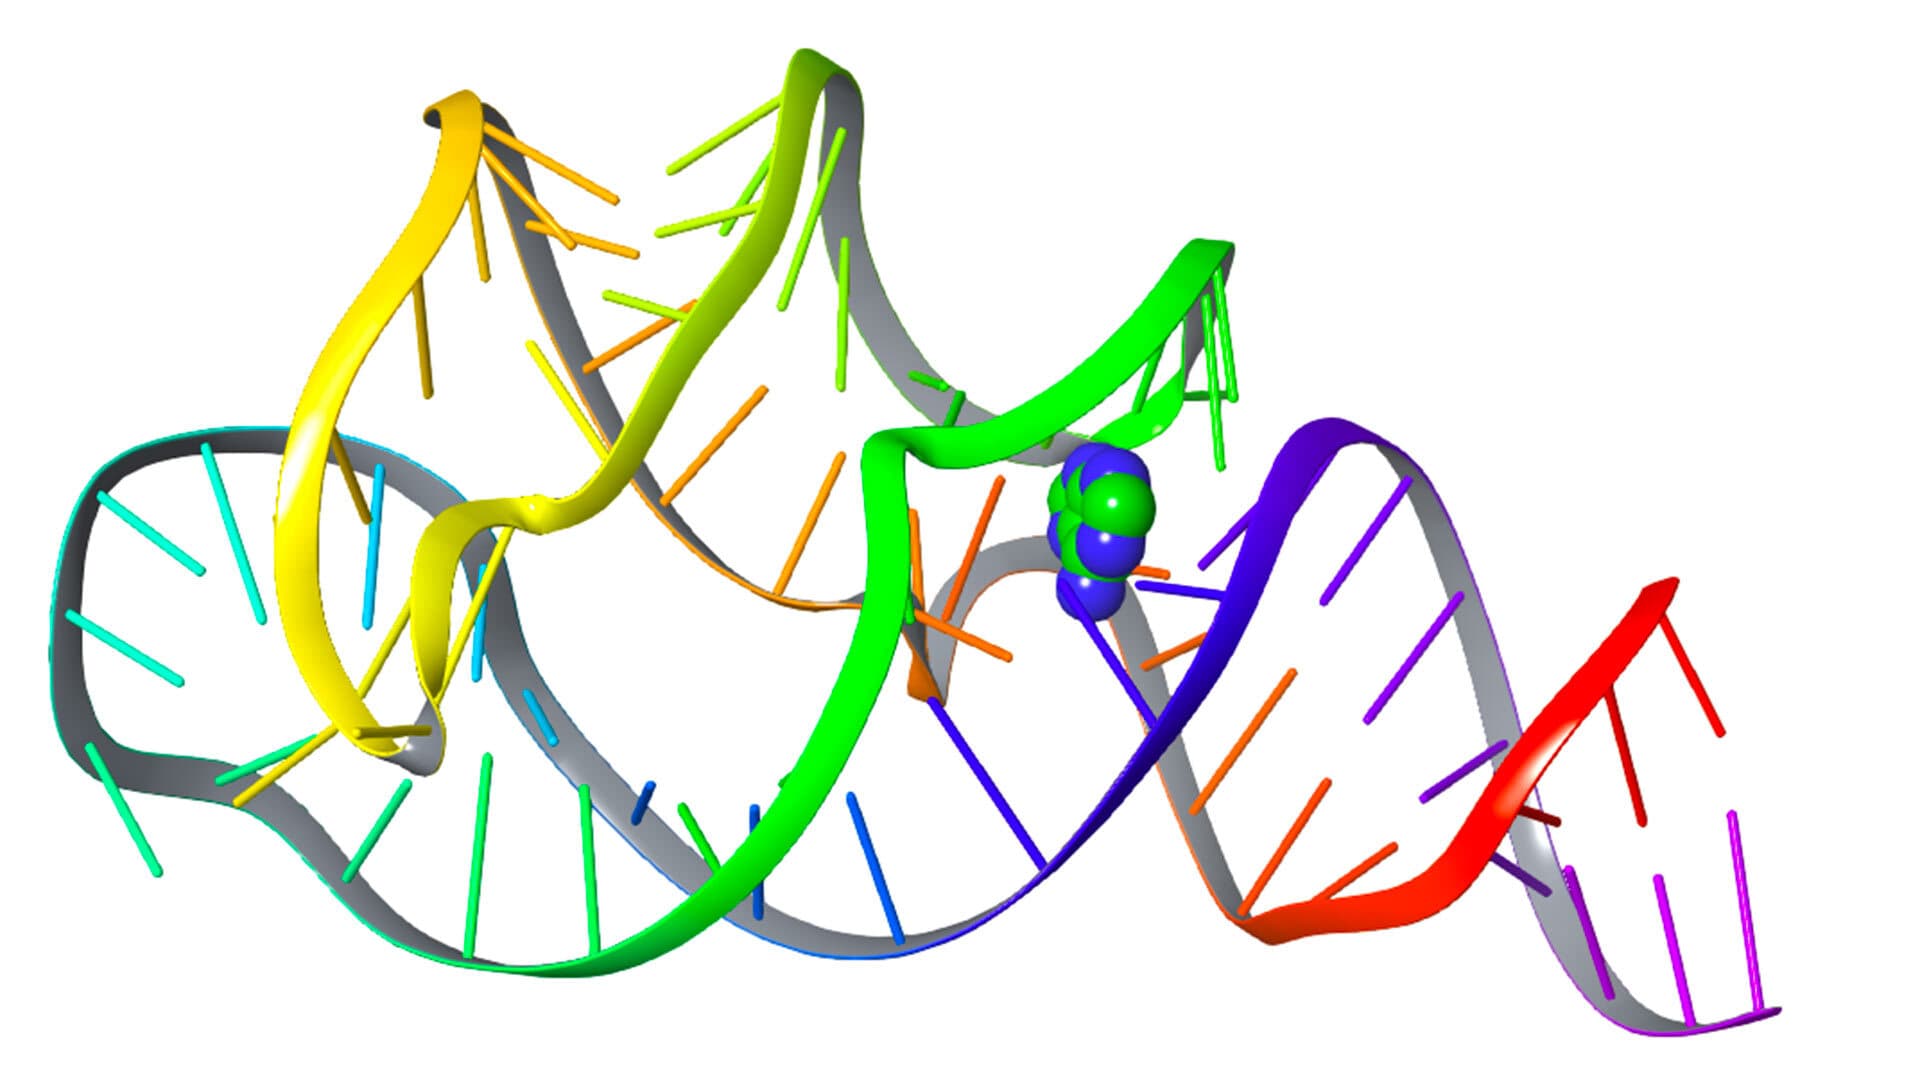 A protein molecule illustration